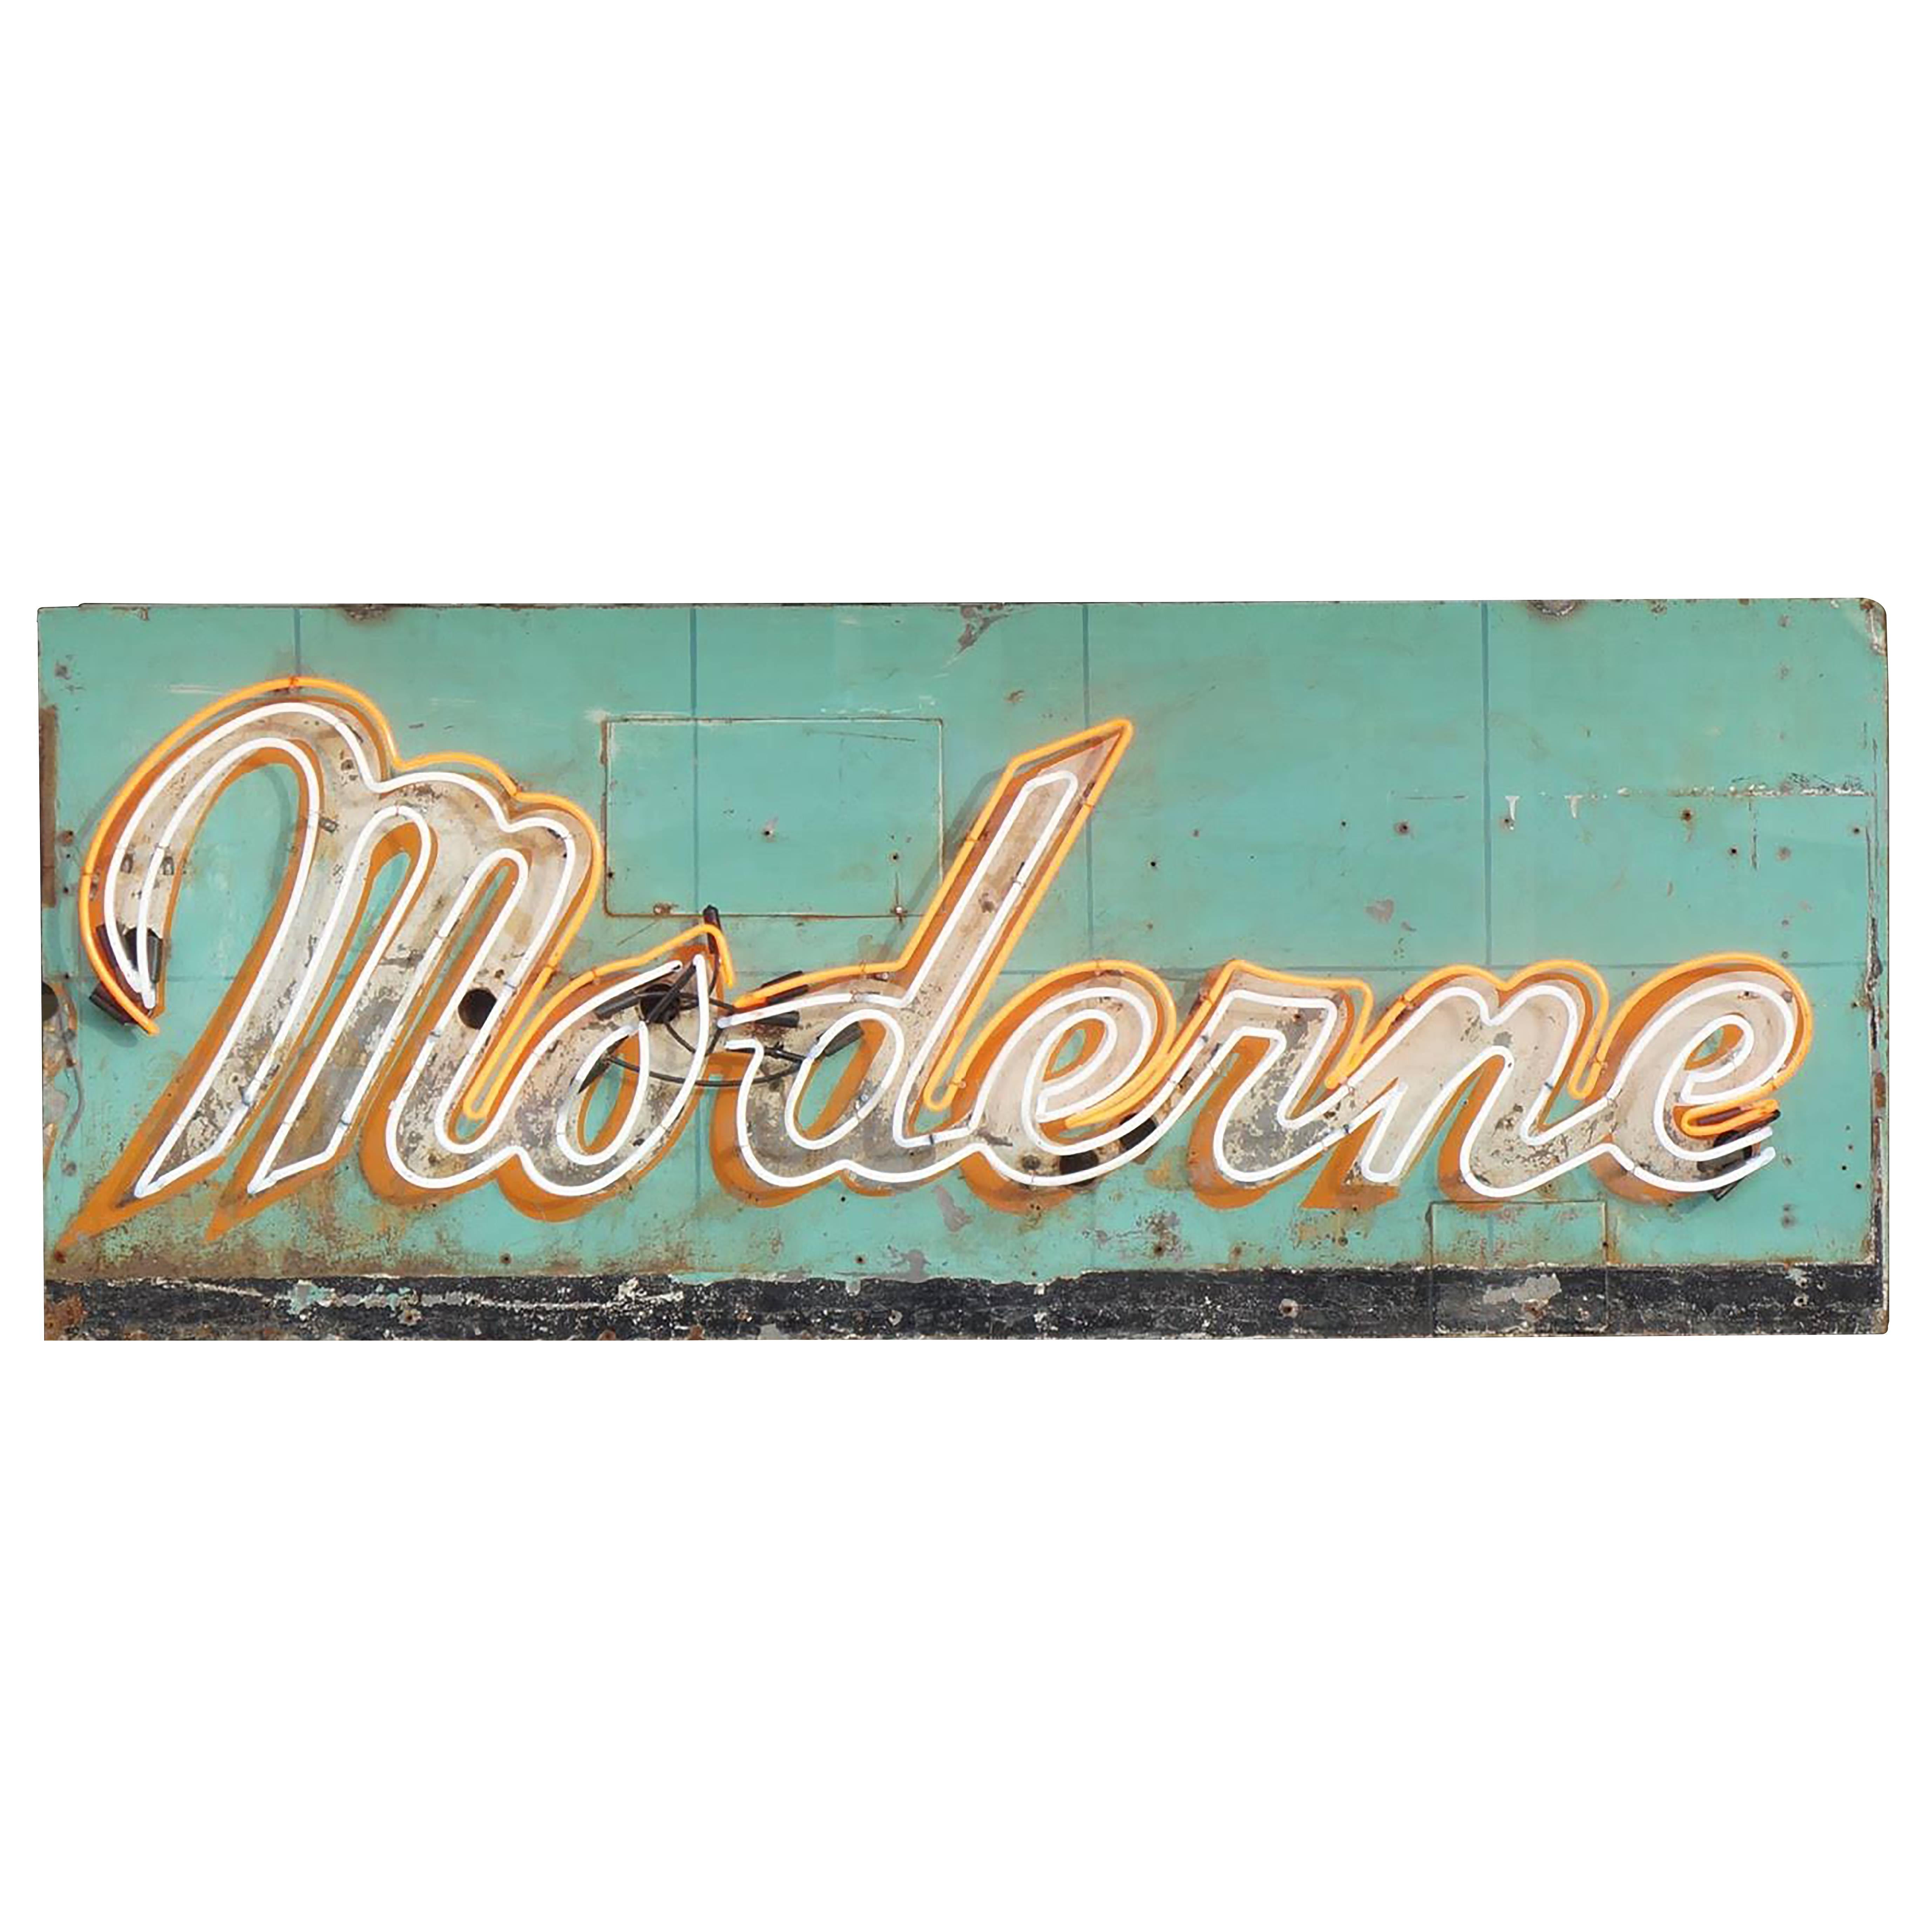 1940s "Moderne" Neon Sign